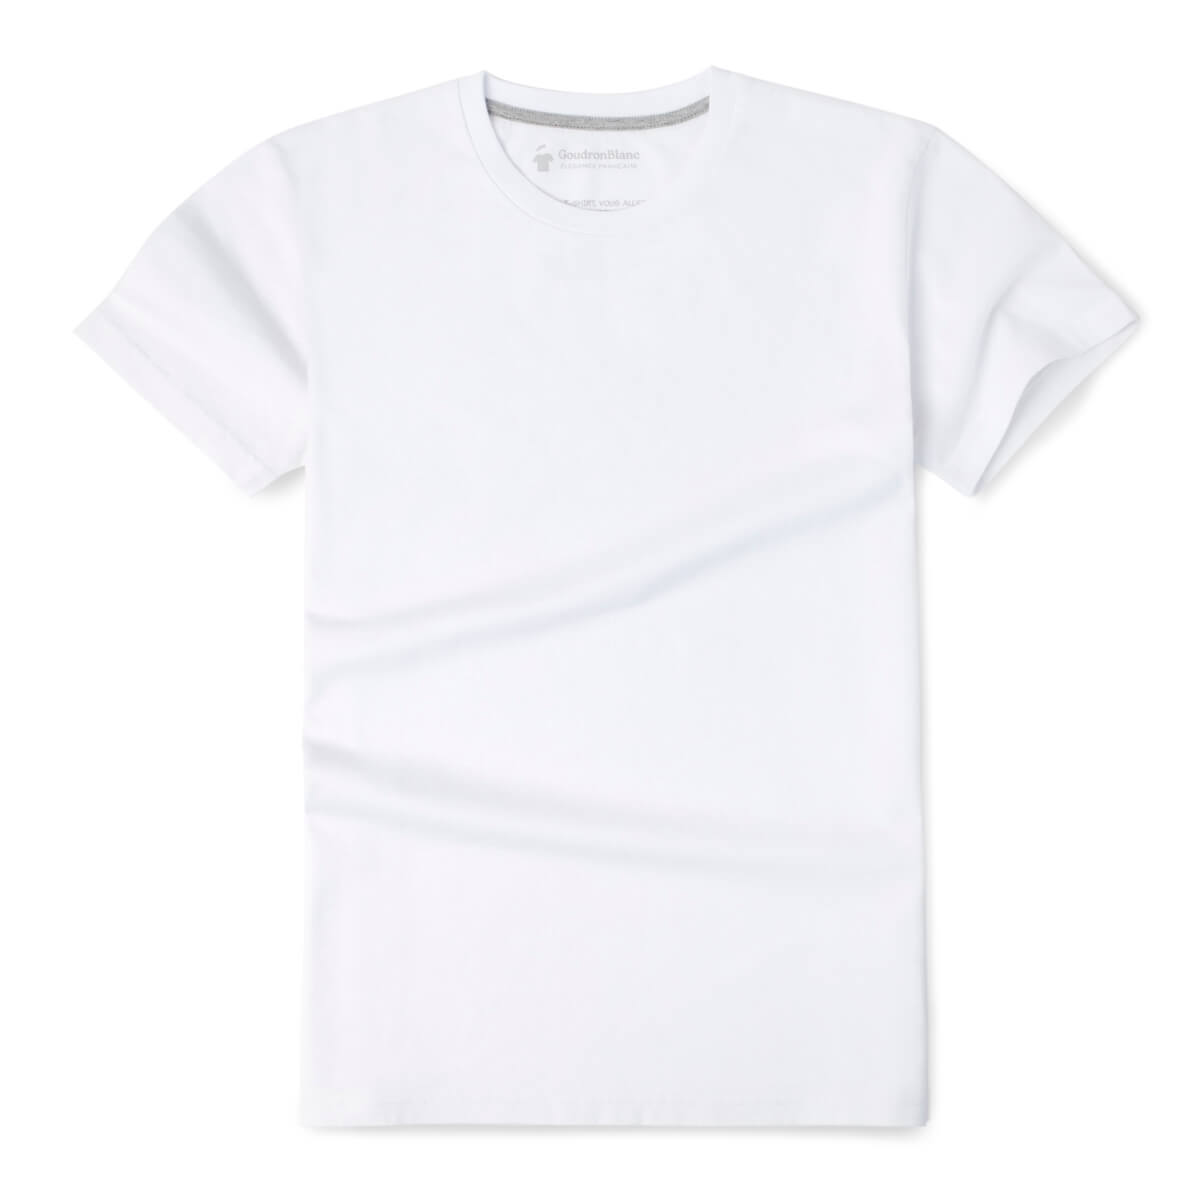 Men's Crew Neck T-shirts - High quality - GoudronBlanc